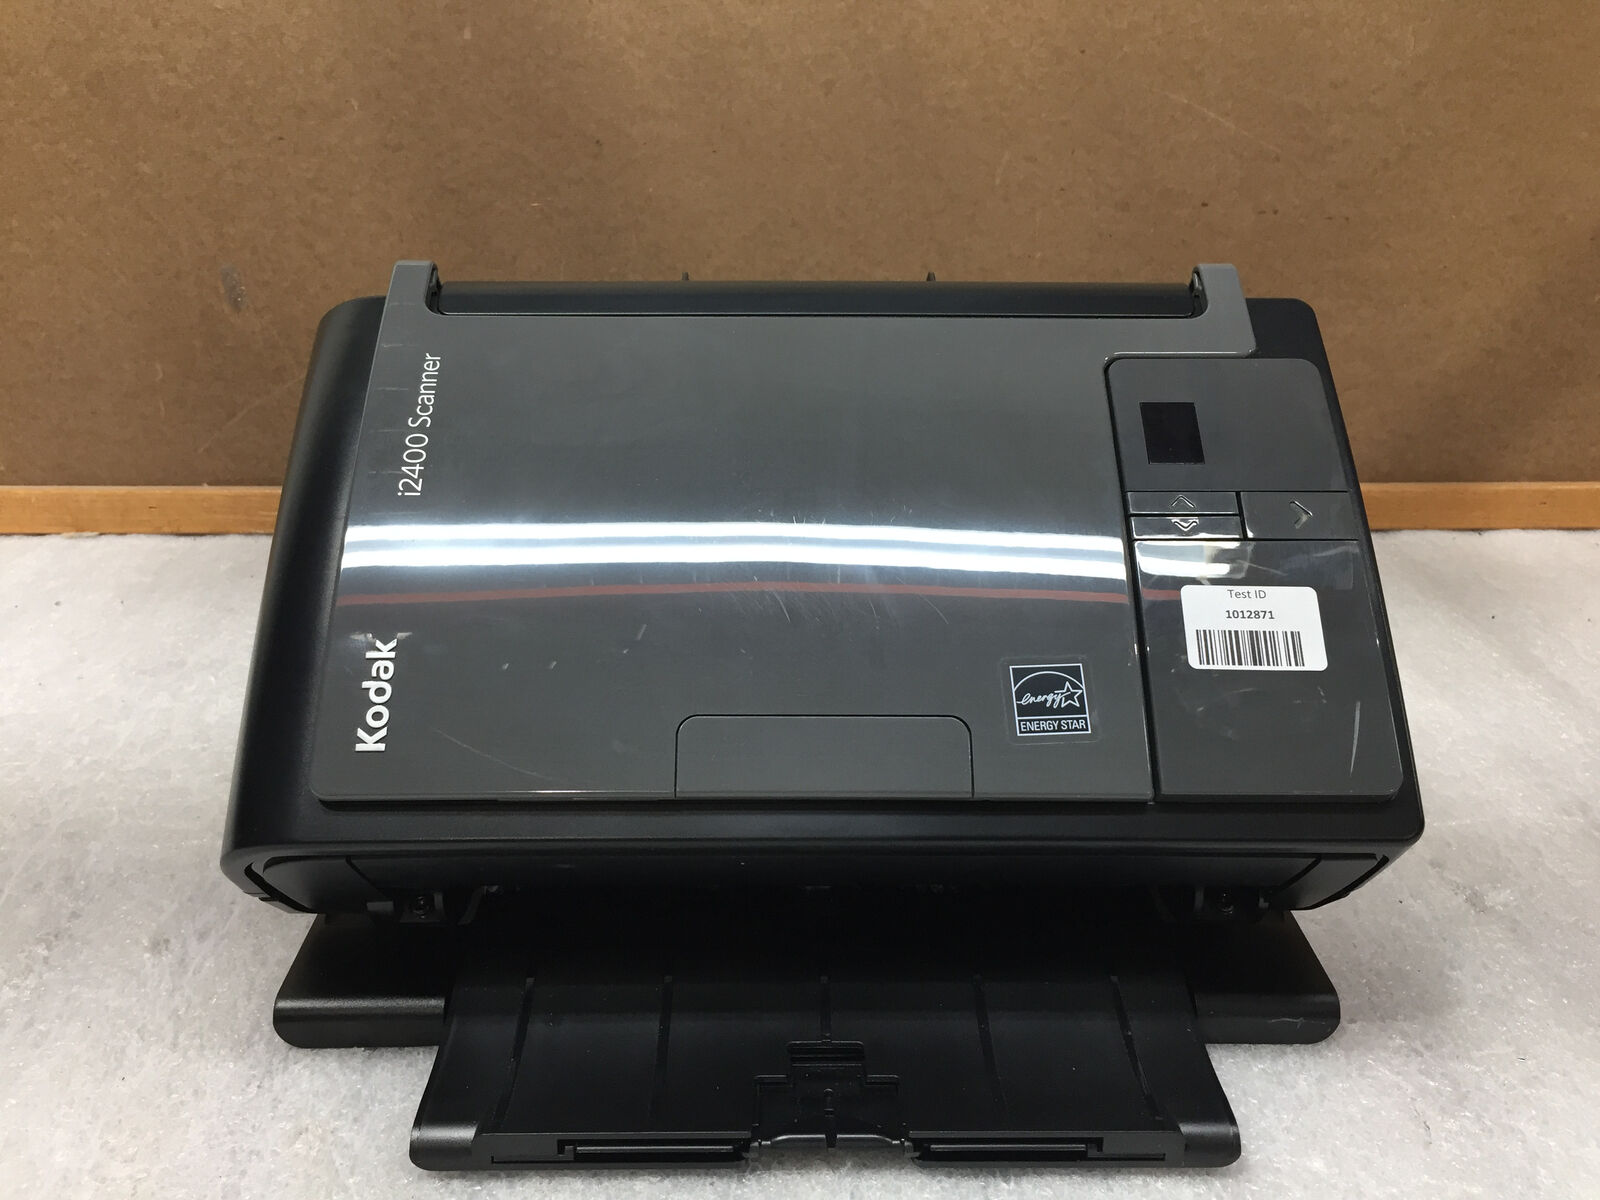 Kodak i2400 scanner USB Color Duplex Document Scanner, No Power Adapter TESTED